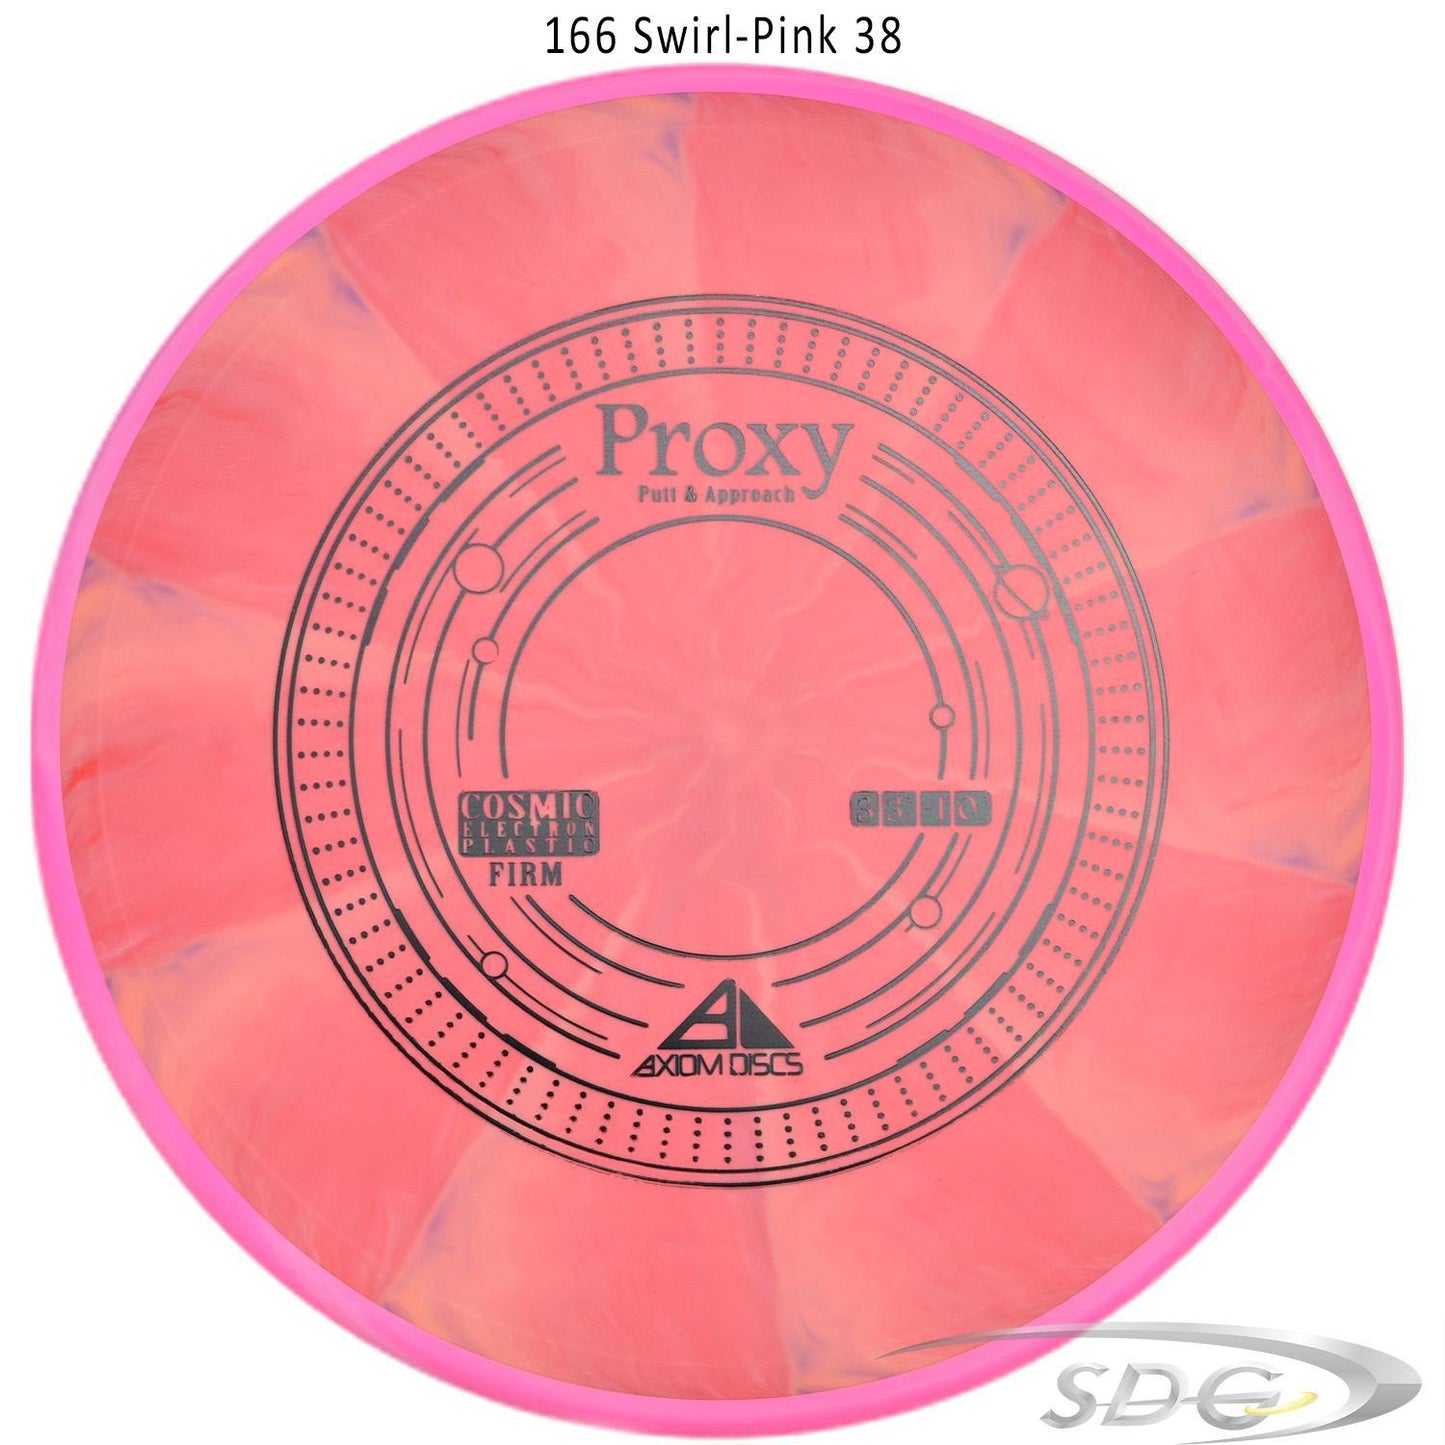 axiom-cosmic-electron-proxy-firm-disc-golf-putt-approach 166 Swirl-Pink 38